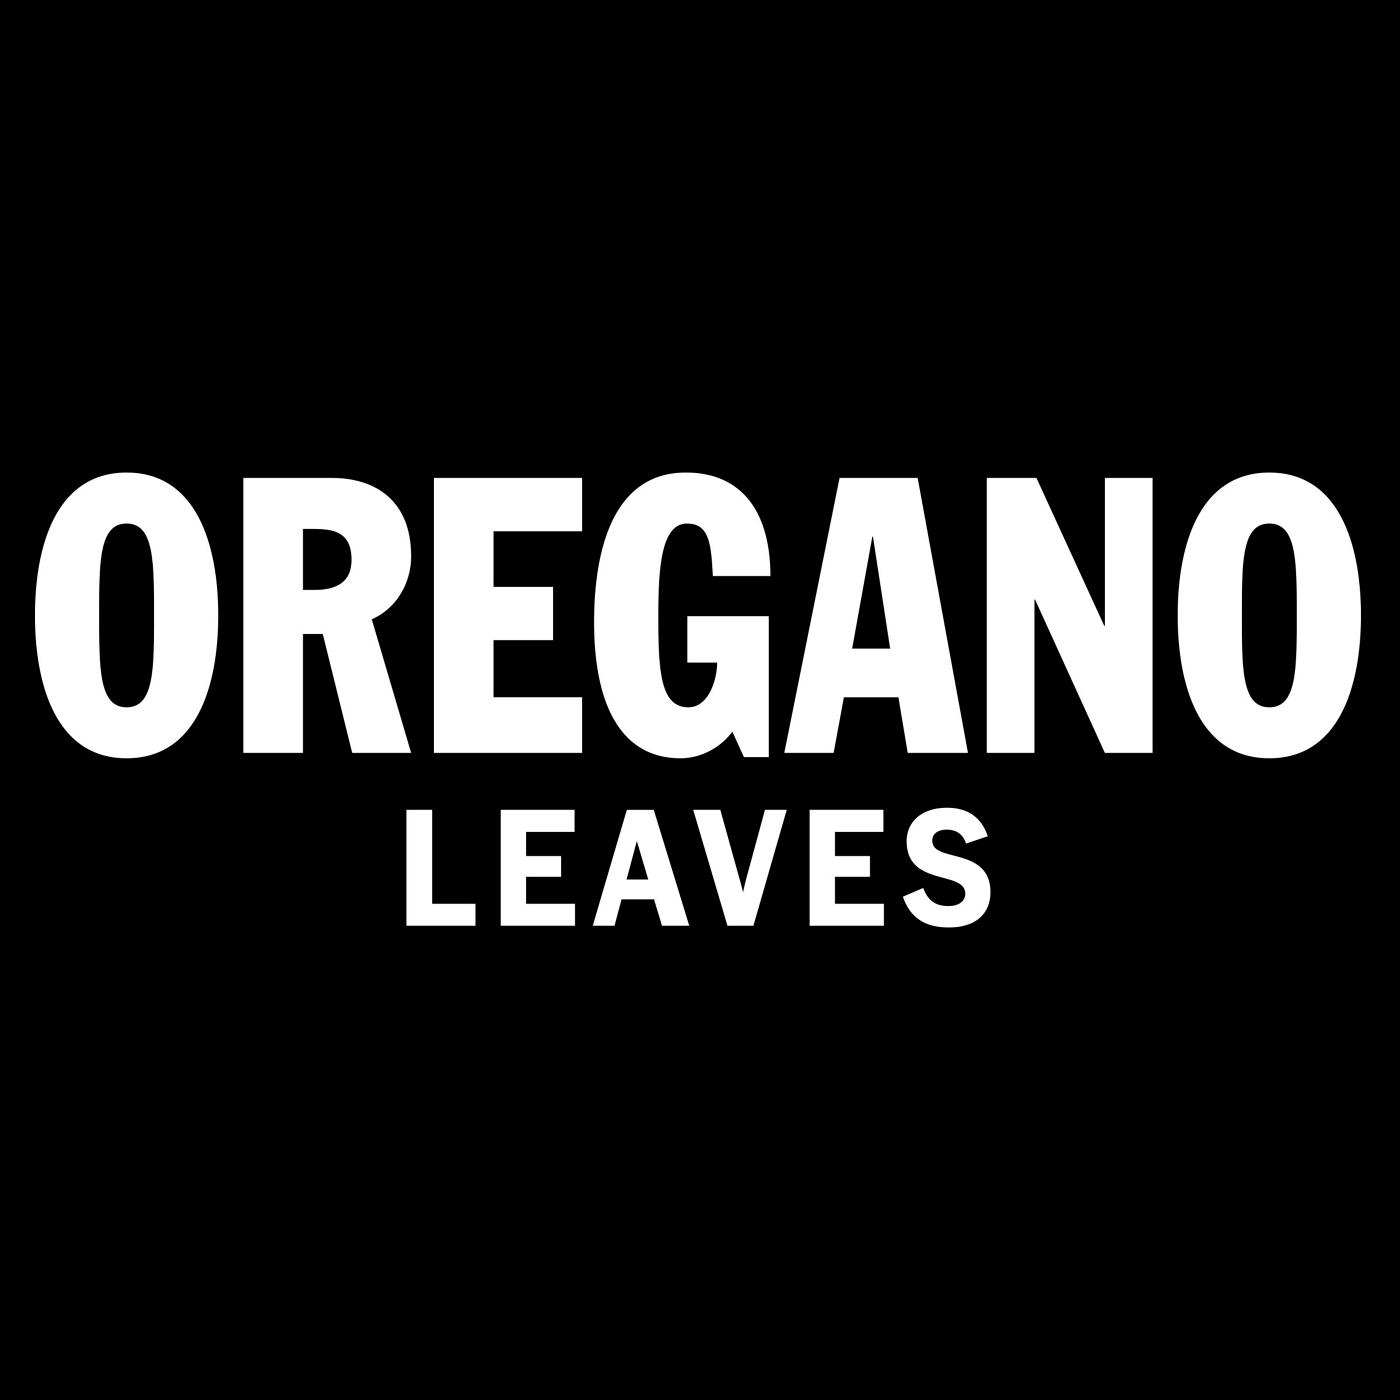 McCormick Oregano Leaves; image 2 of 7